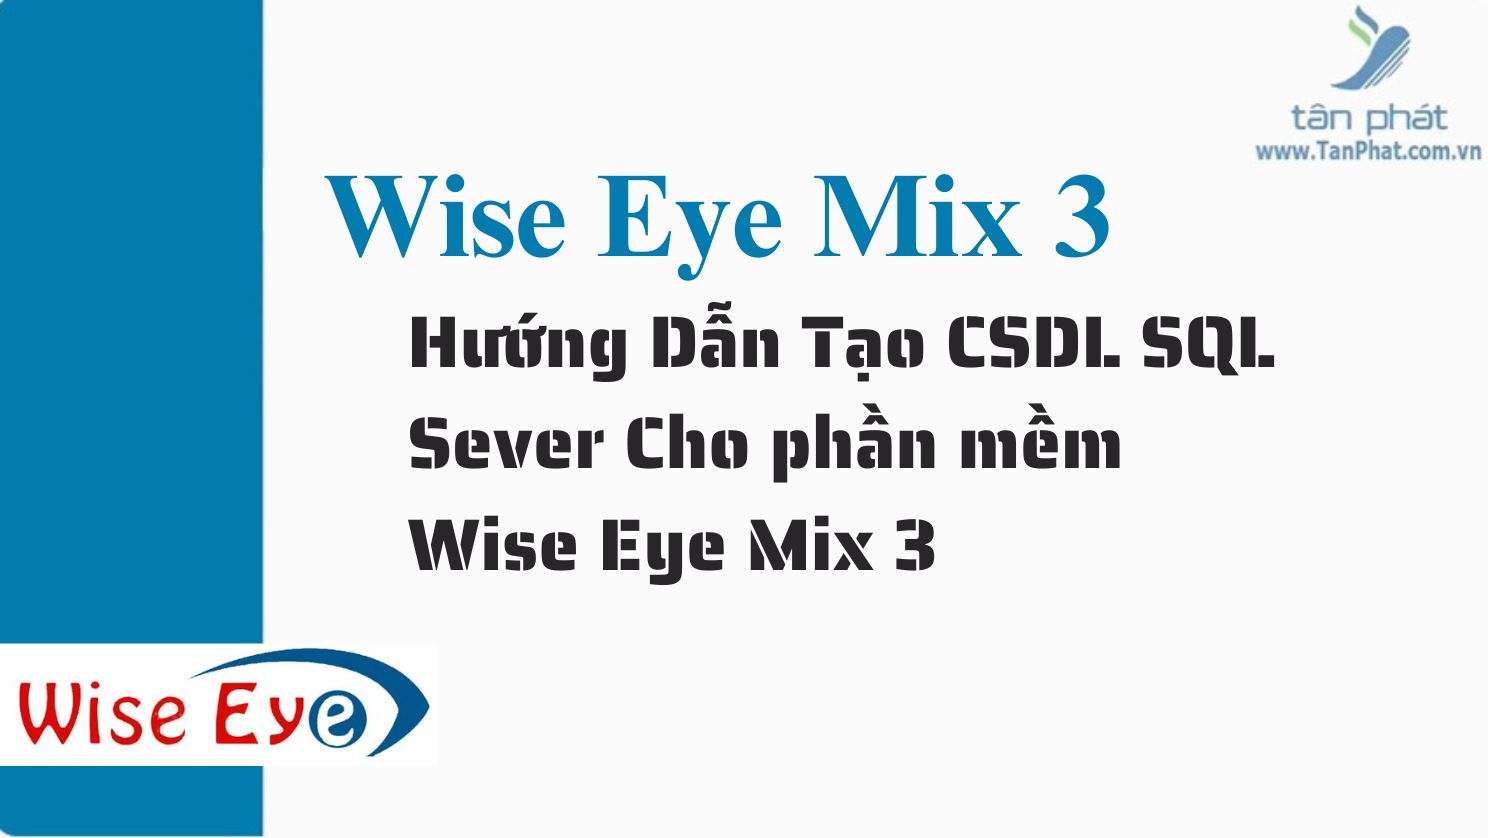 Hướng Dẫn Tạo CSDL SQL Sever Cho phần mềm Wise Eye Mix 3 trên máy RJ550 RJ550A RJ550 Plus RJ850A RJ1000 ZKT360 K300 X938C X958C X958A  T8plus X989C RJ919 RJ879C T6C  B3C SC403 IN05 U160 G